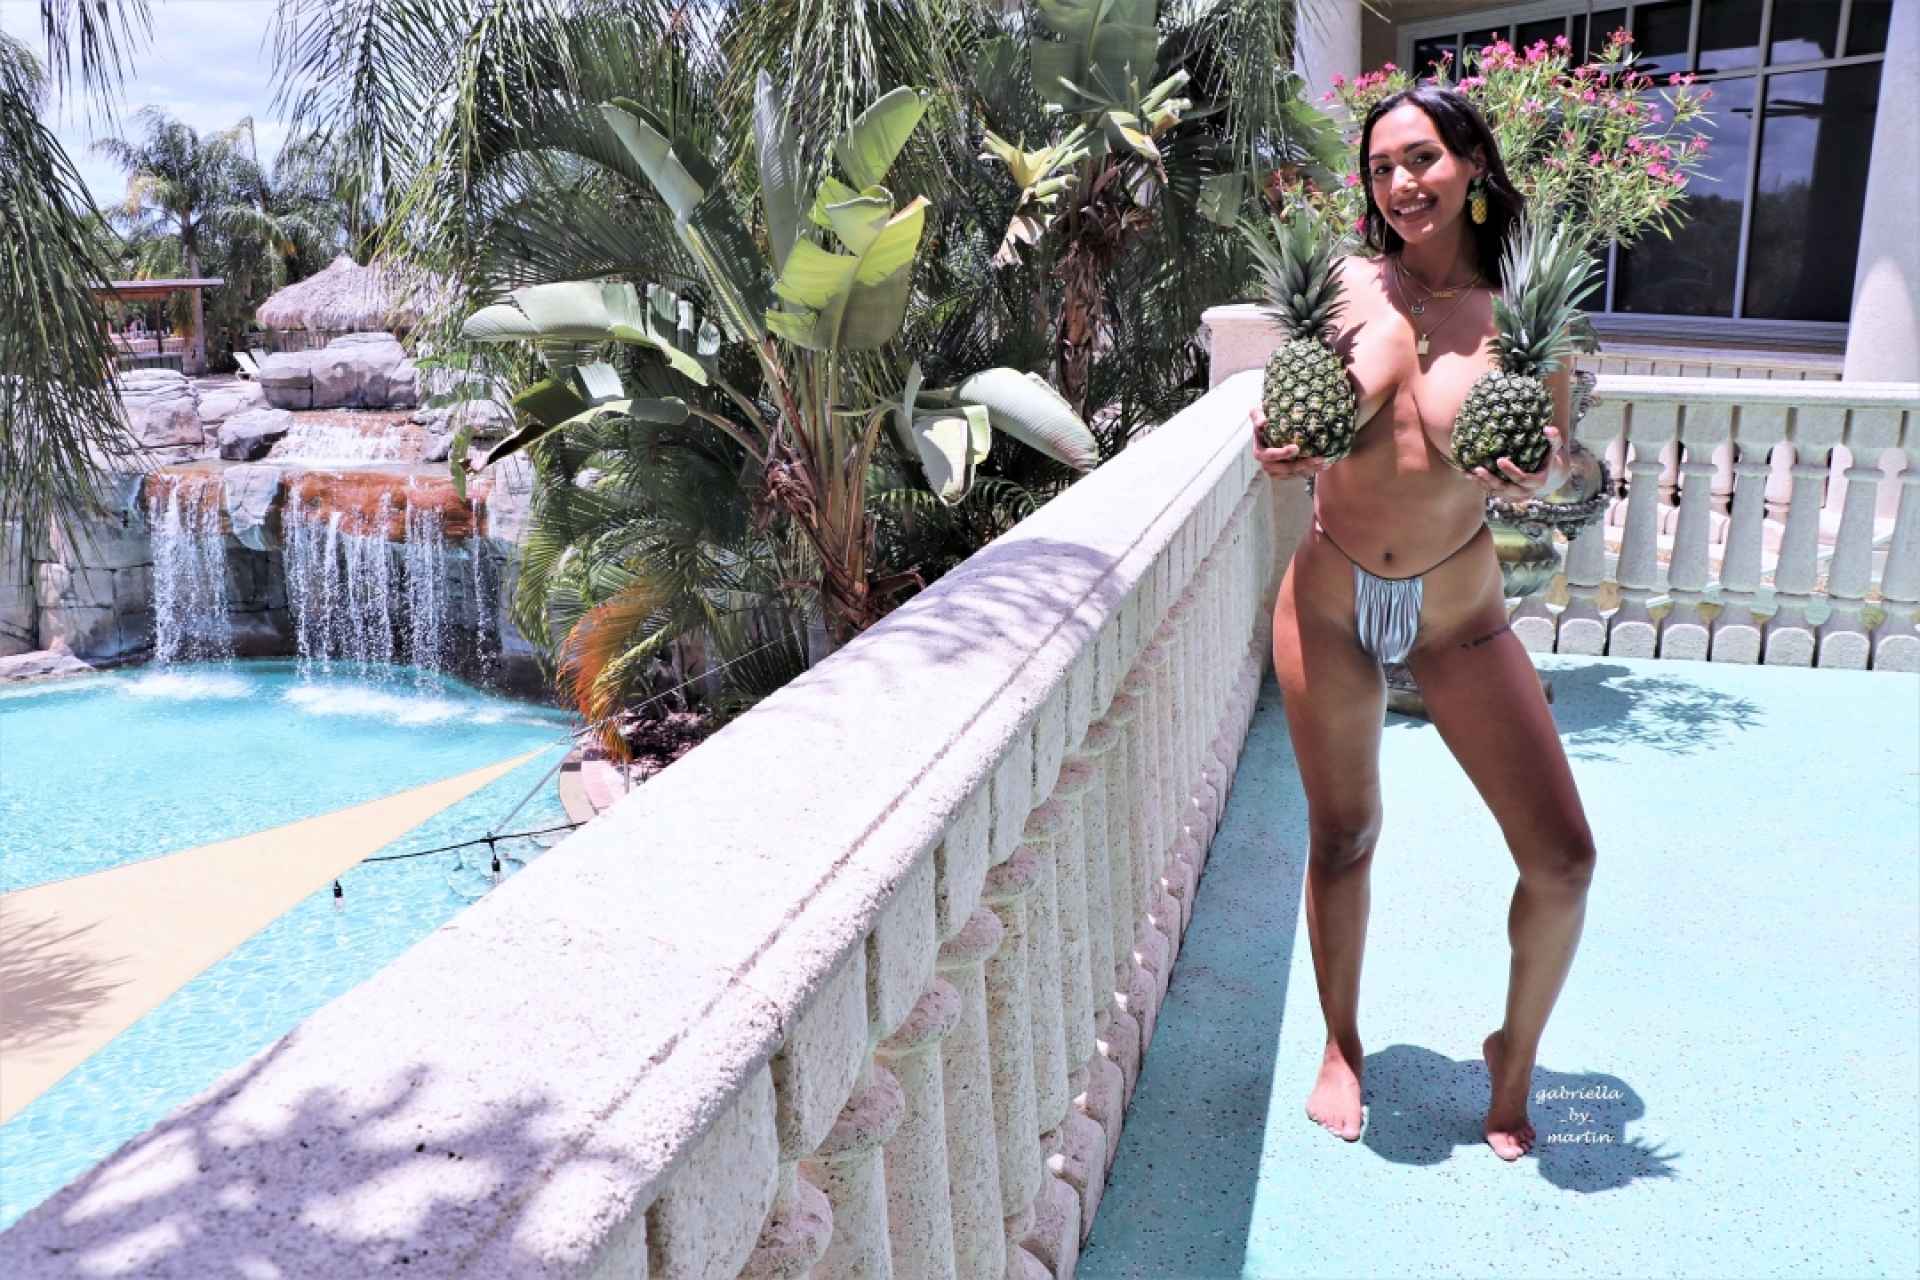 swinger nude resort florida